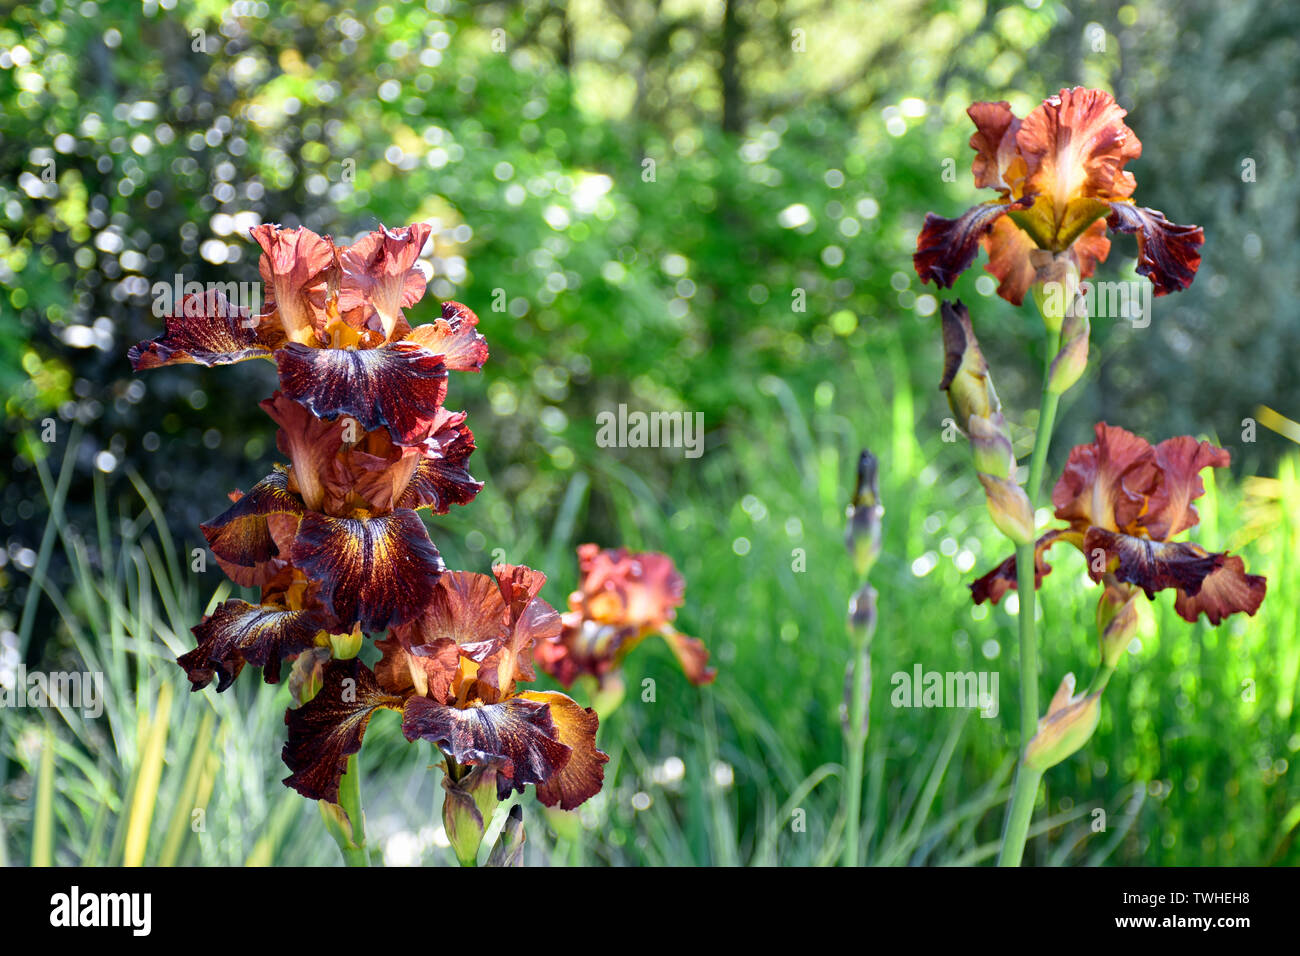 Barbuto e variegato Iris gigante Foto Stock